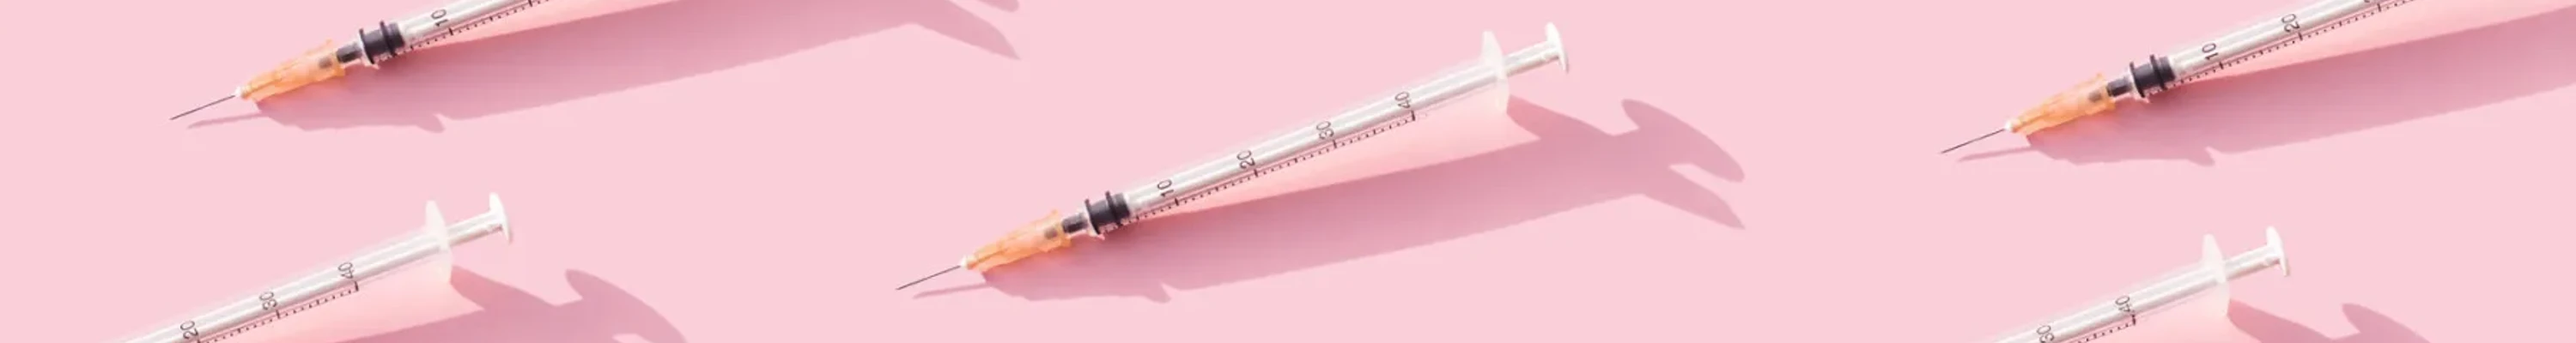 Multiple immunisation needles on a pink background (1)